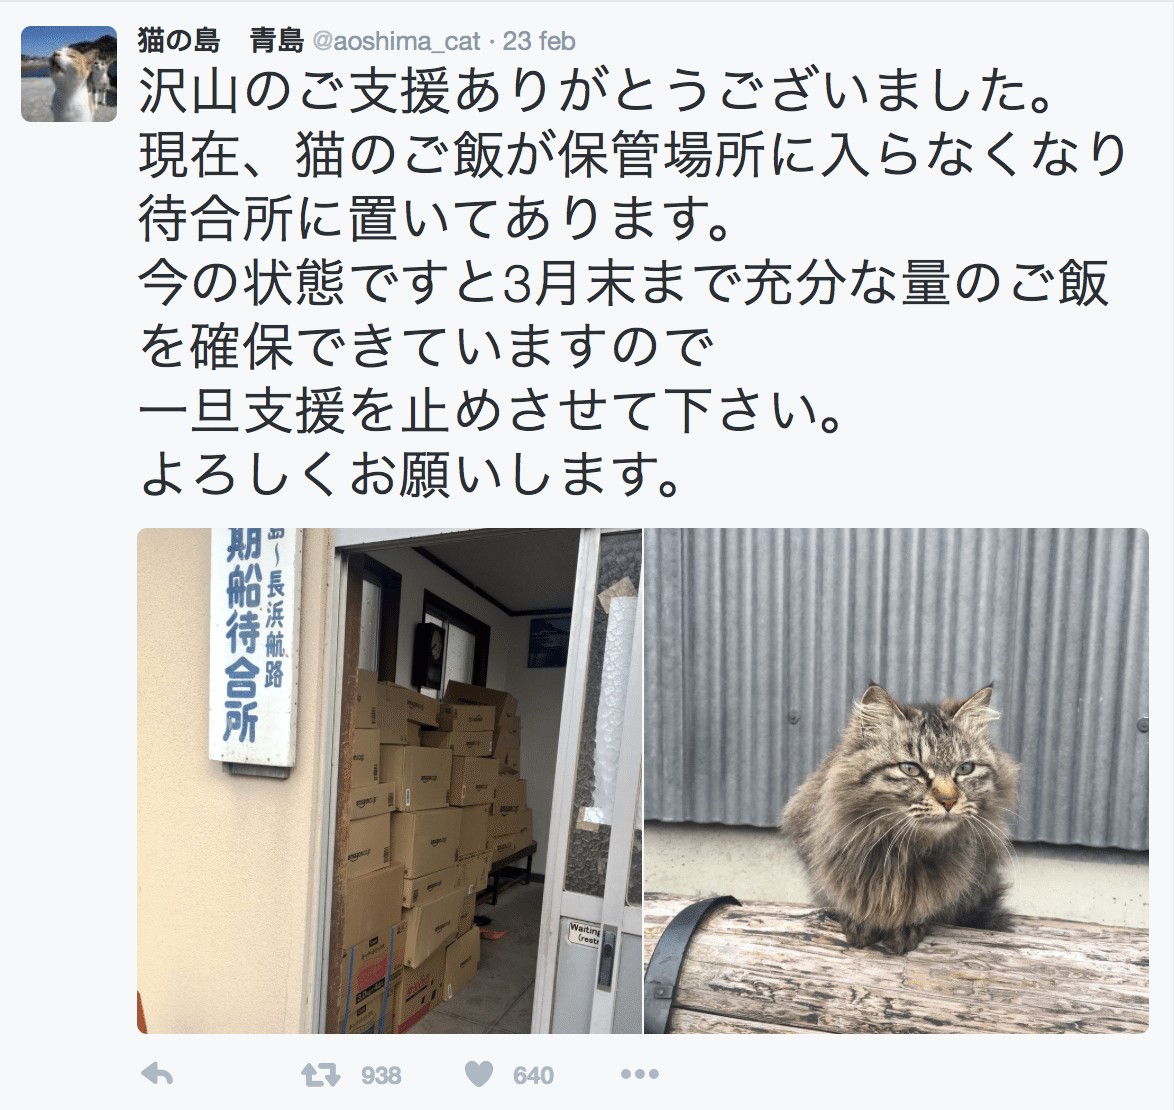 Aoshima riceve pappe dopo un tweet